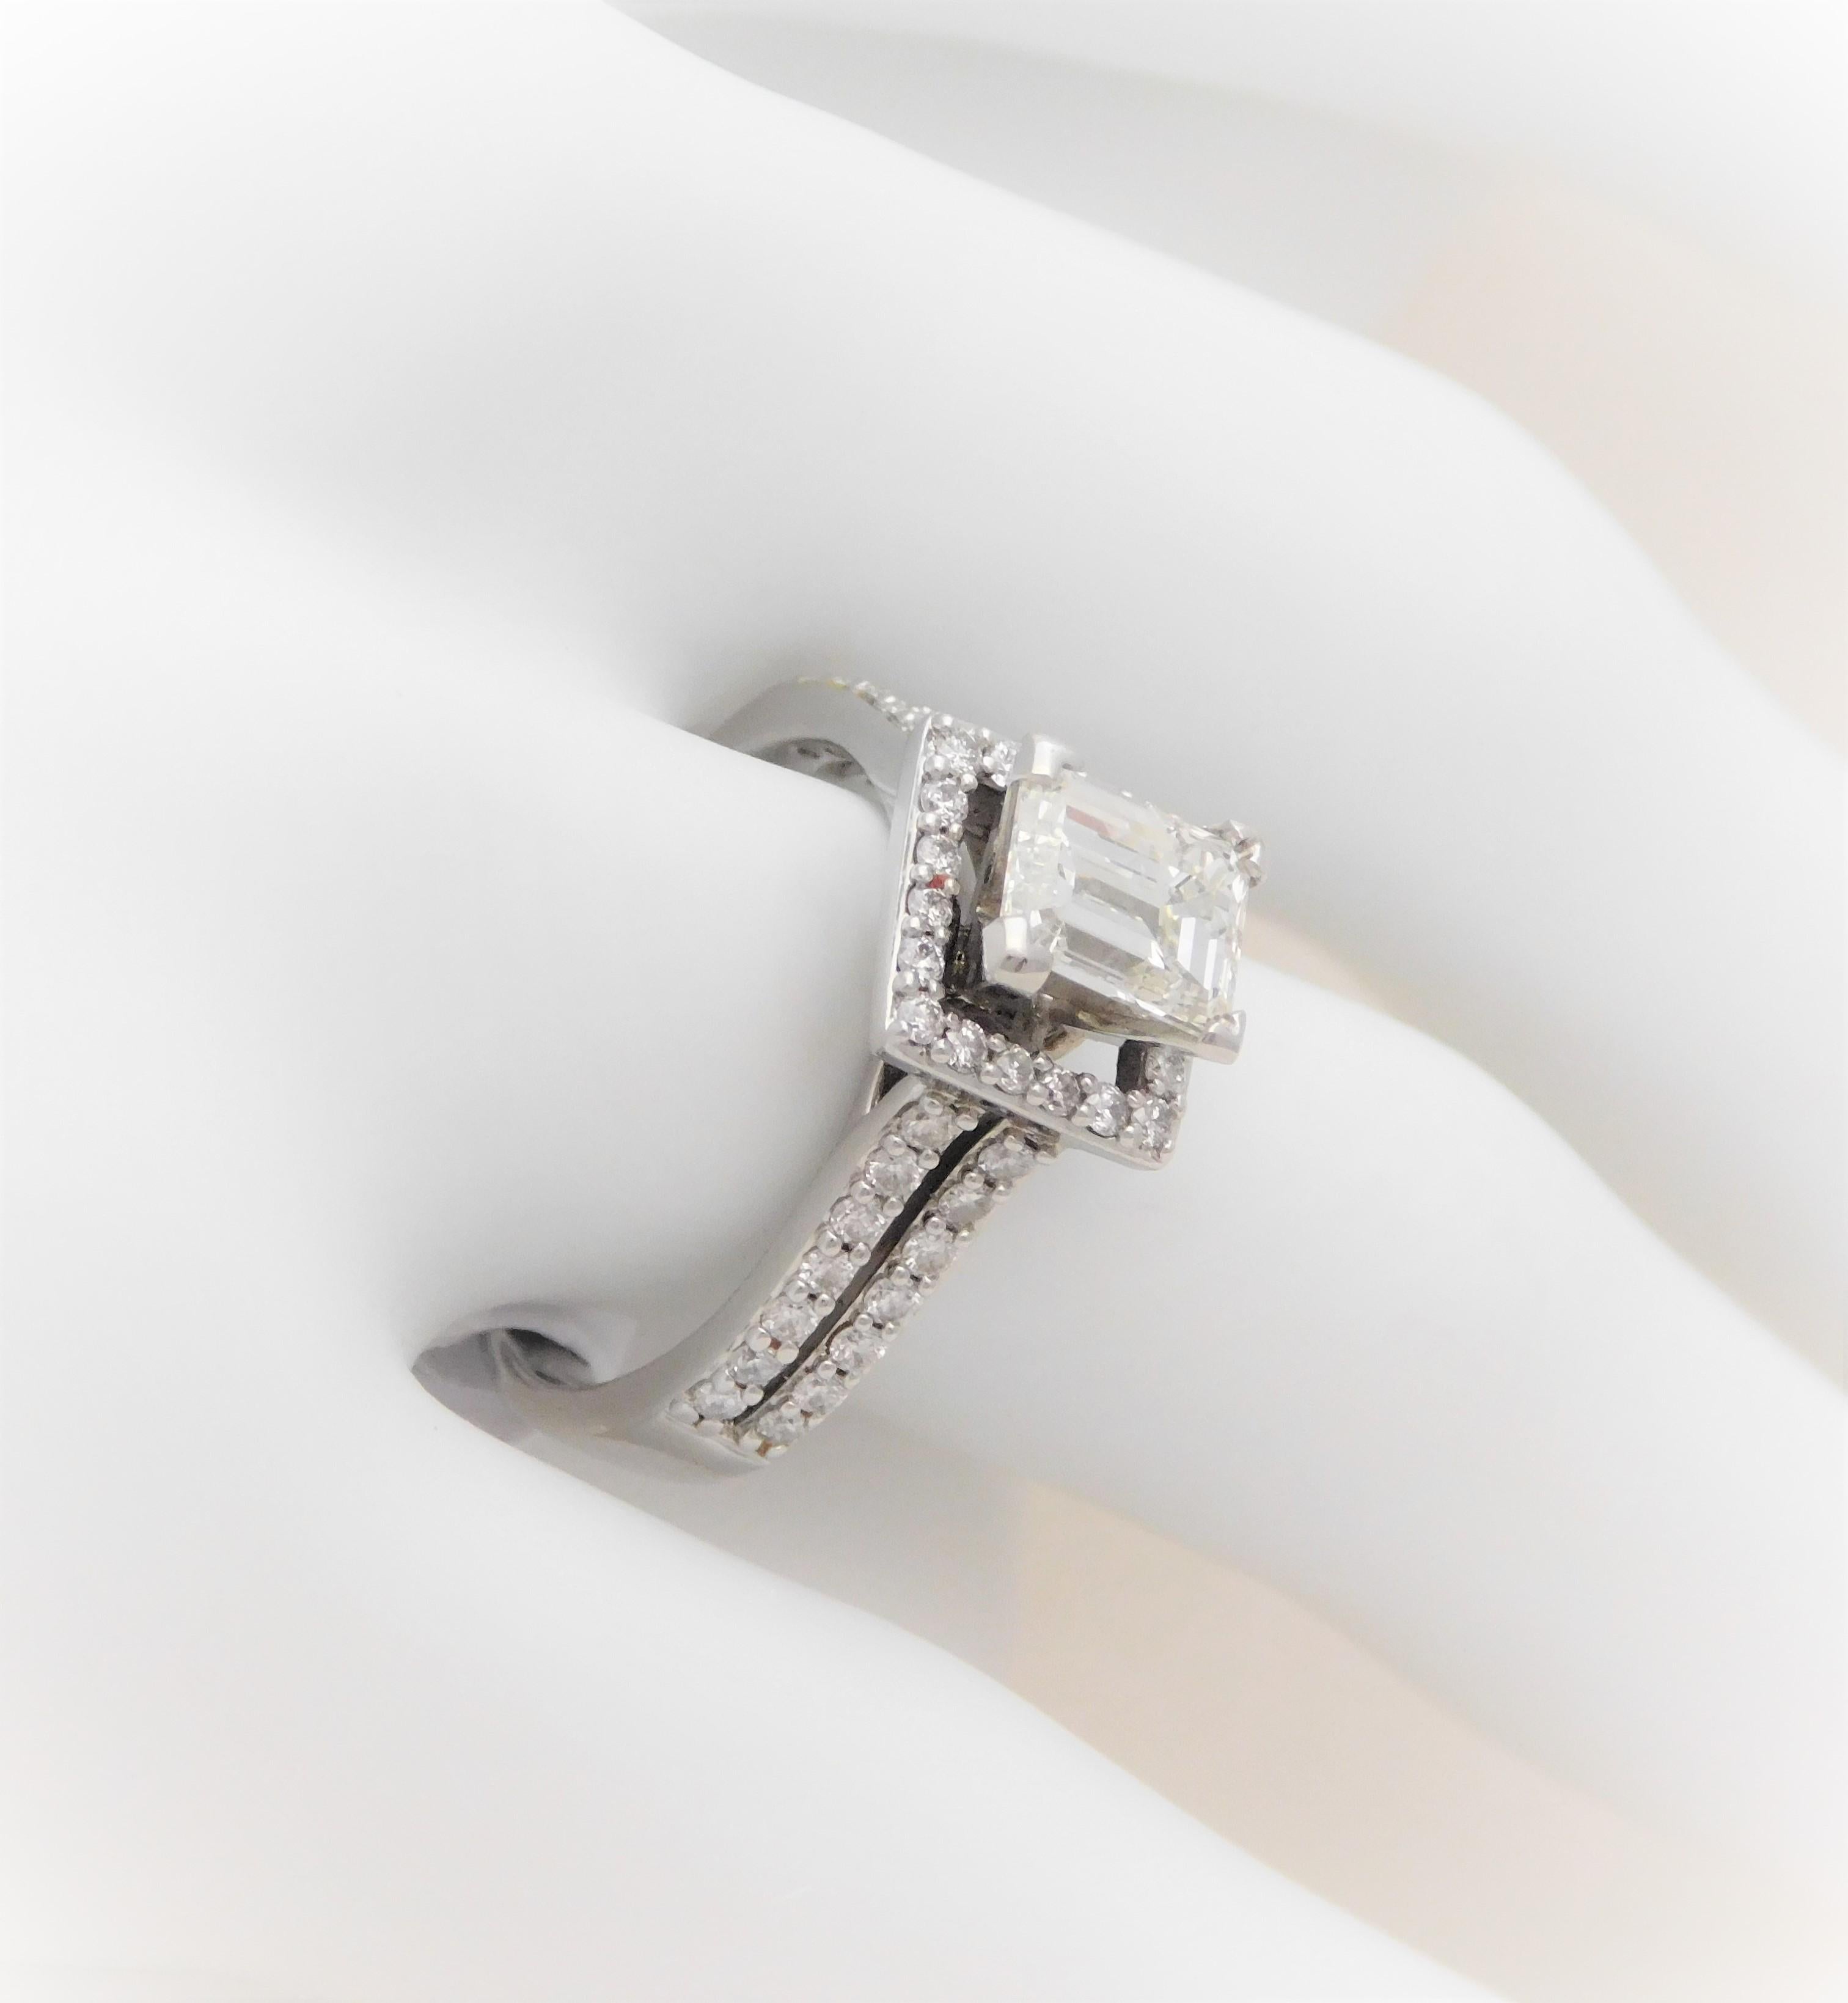 UGS Certified 2.18 Carat Emerald Cut Diamond Engagement Ring 13